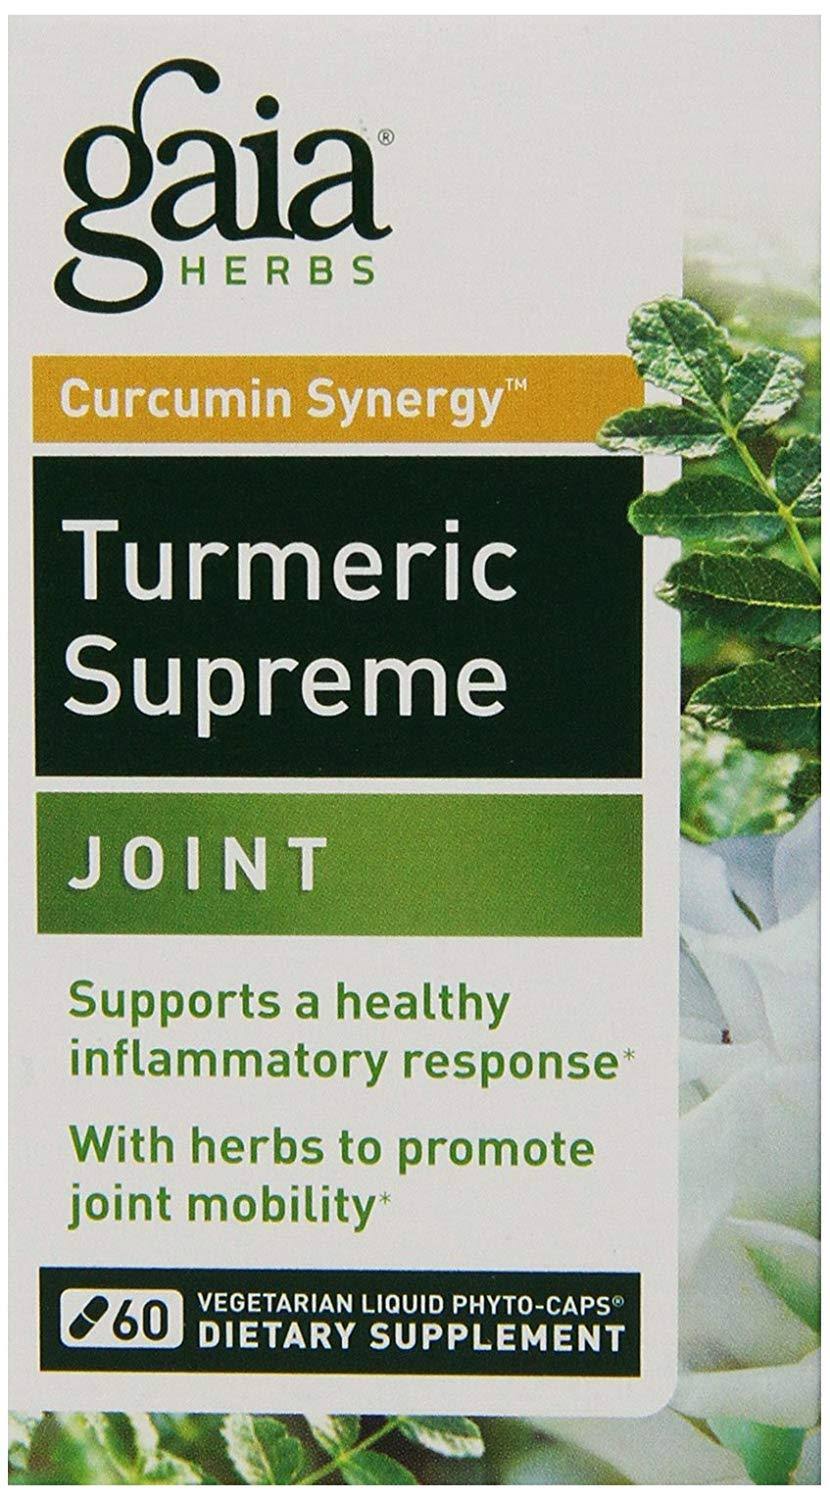 Gaia Herbs Turmeric Supreme - 60 Liquid Phyto-Caps